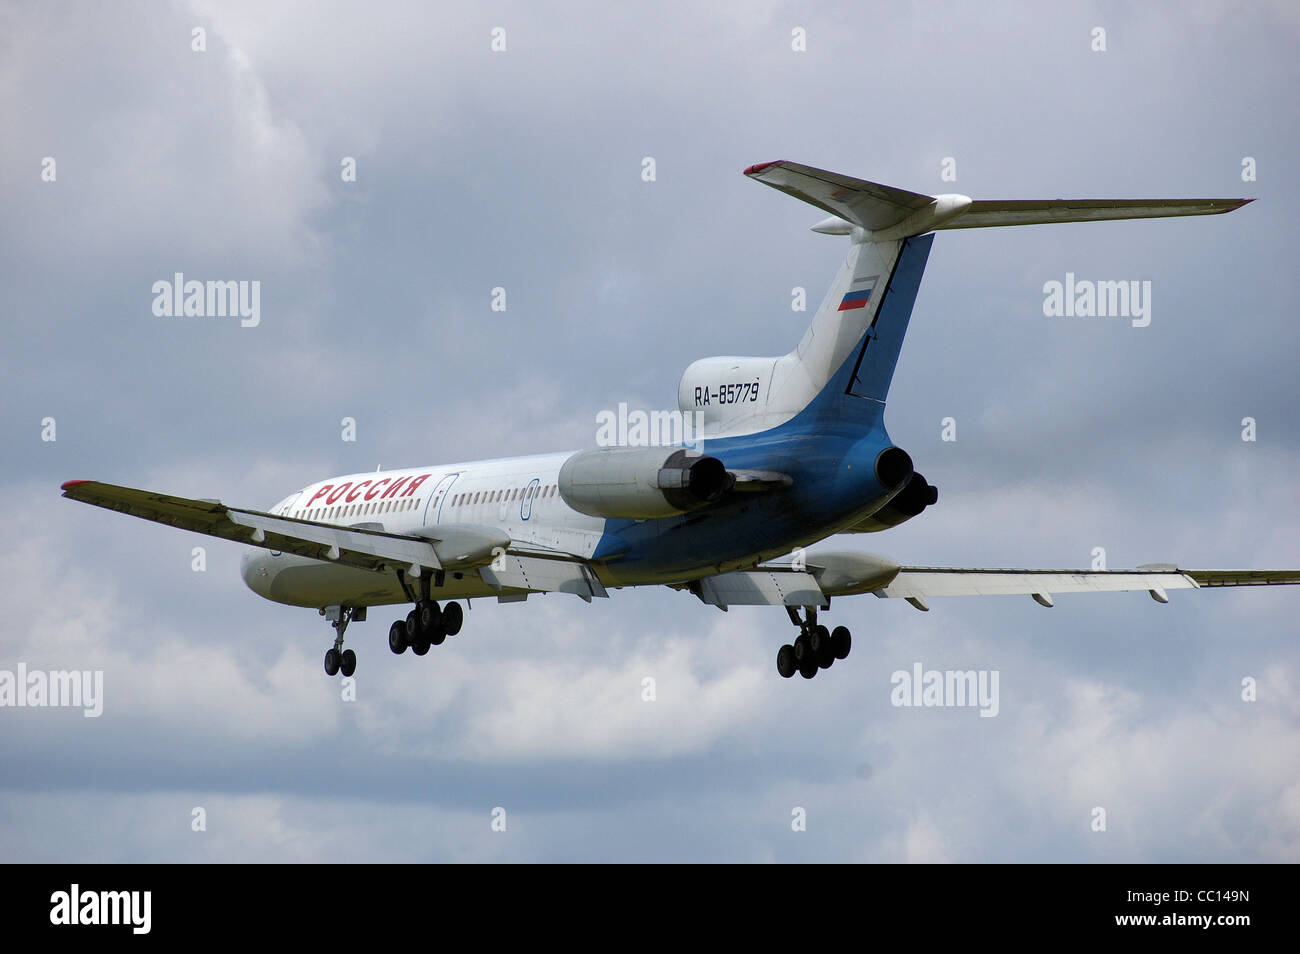 Rossiya - Russian Airlines Tu-154M (RA-85779) landing at London Heathrow Airport. Stock Photo